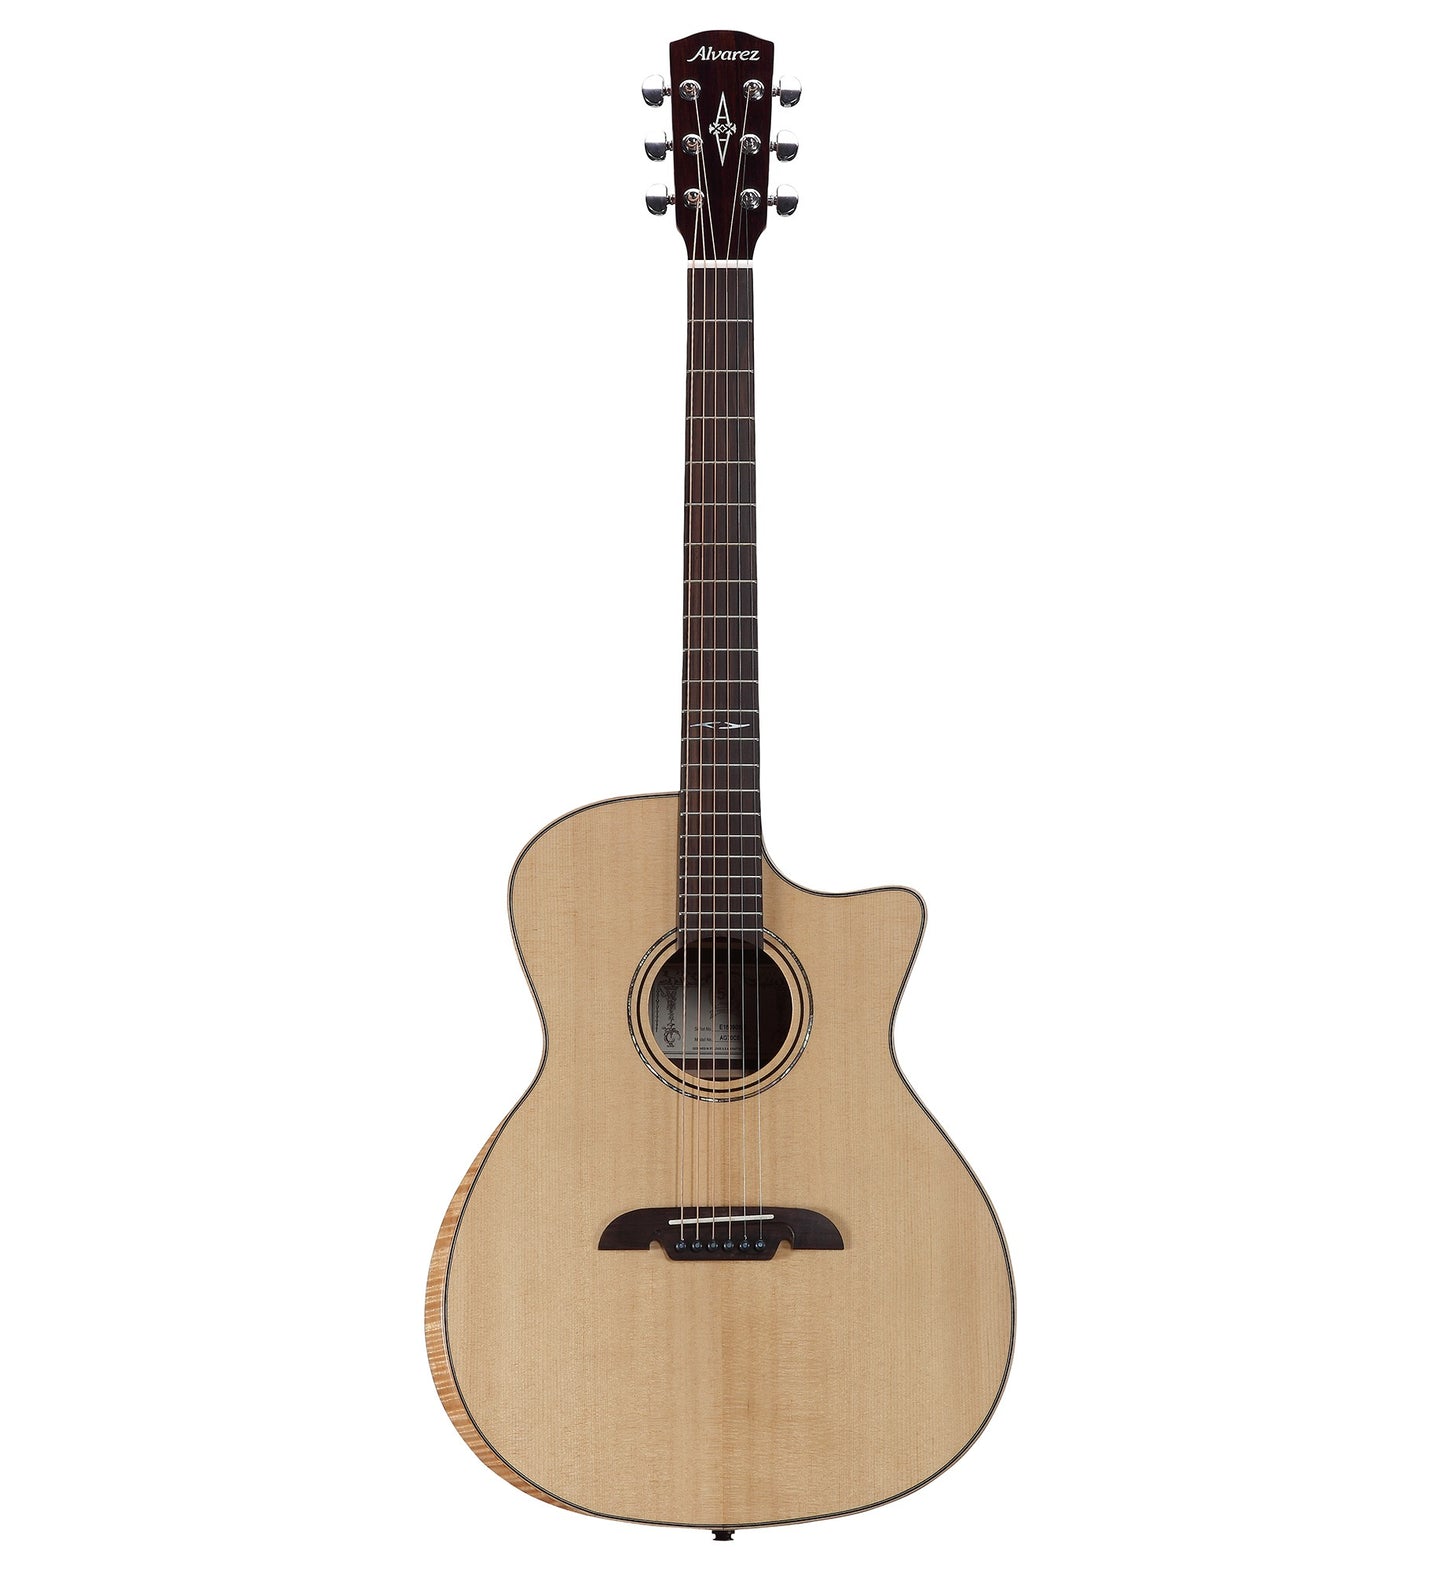 Alvarez AG70WCEAR Solid Top Grand Auditorium Acoustic Guitar with Pickup